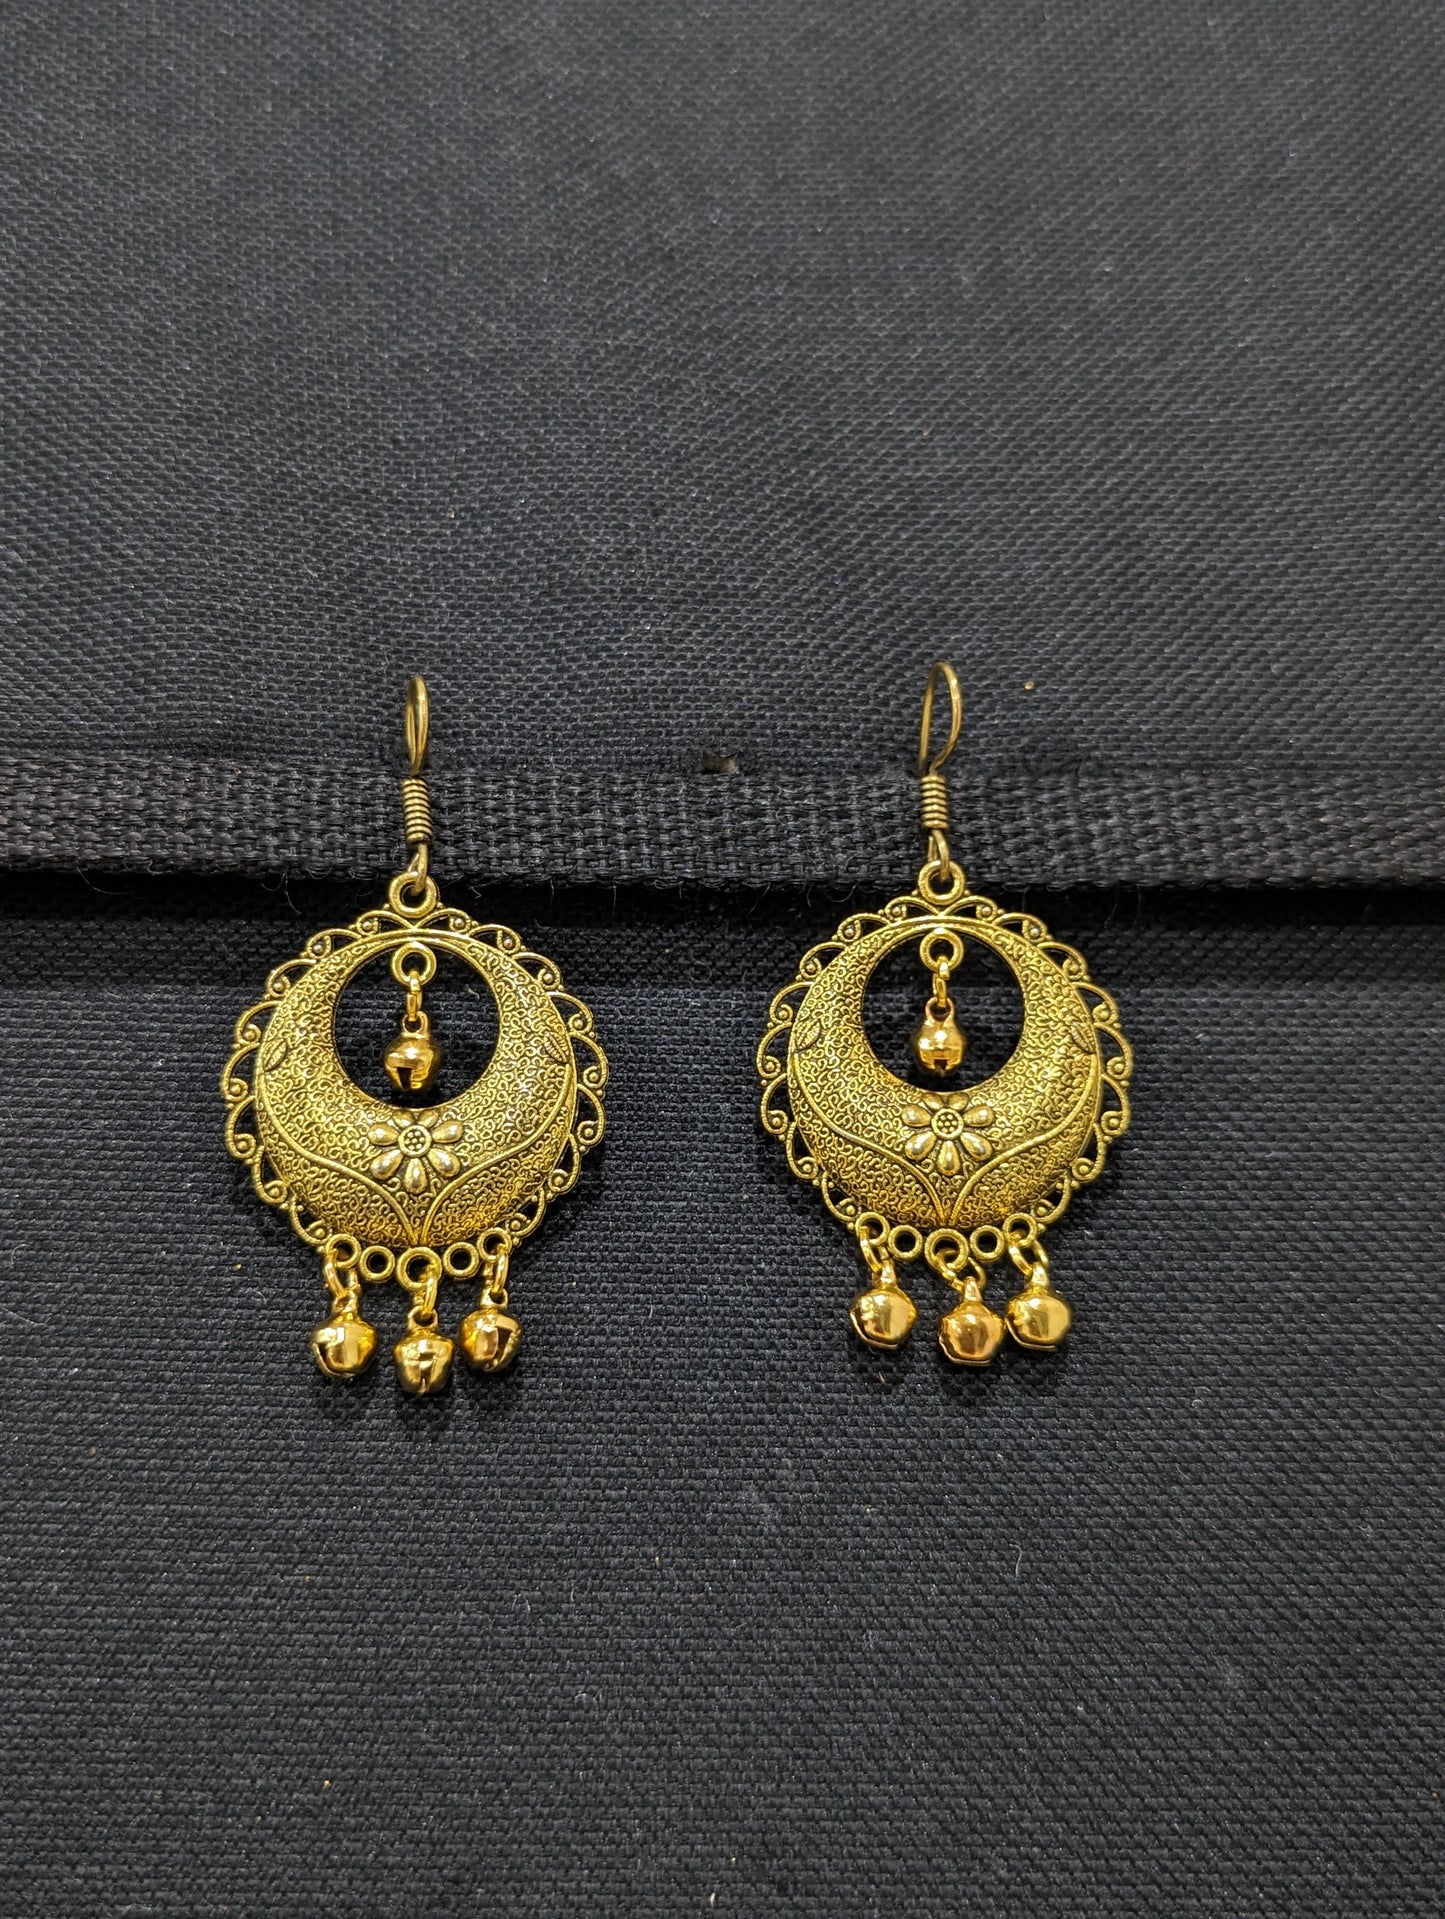 Antique gold oxidized hook drop Earrings - 2 designs